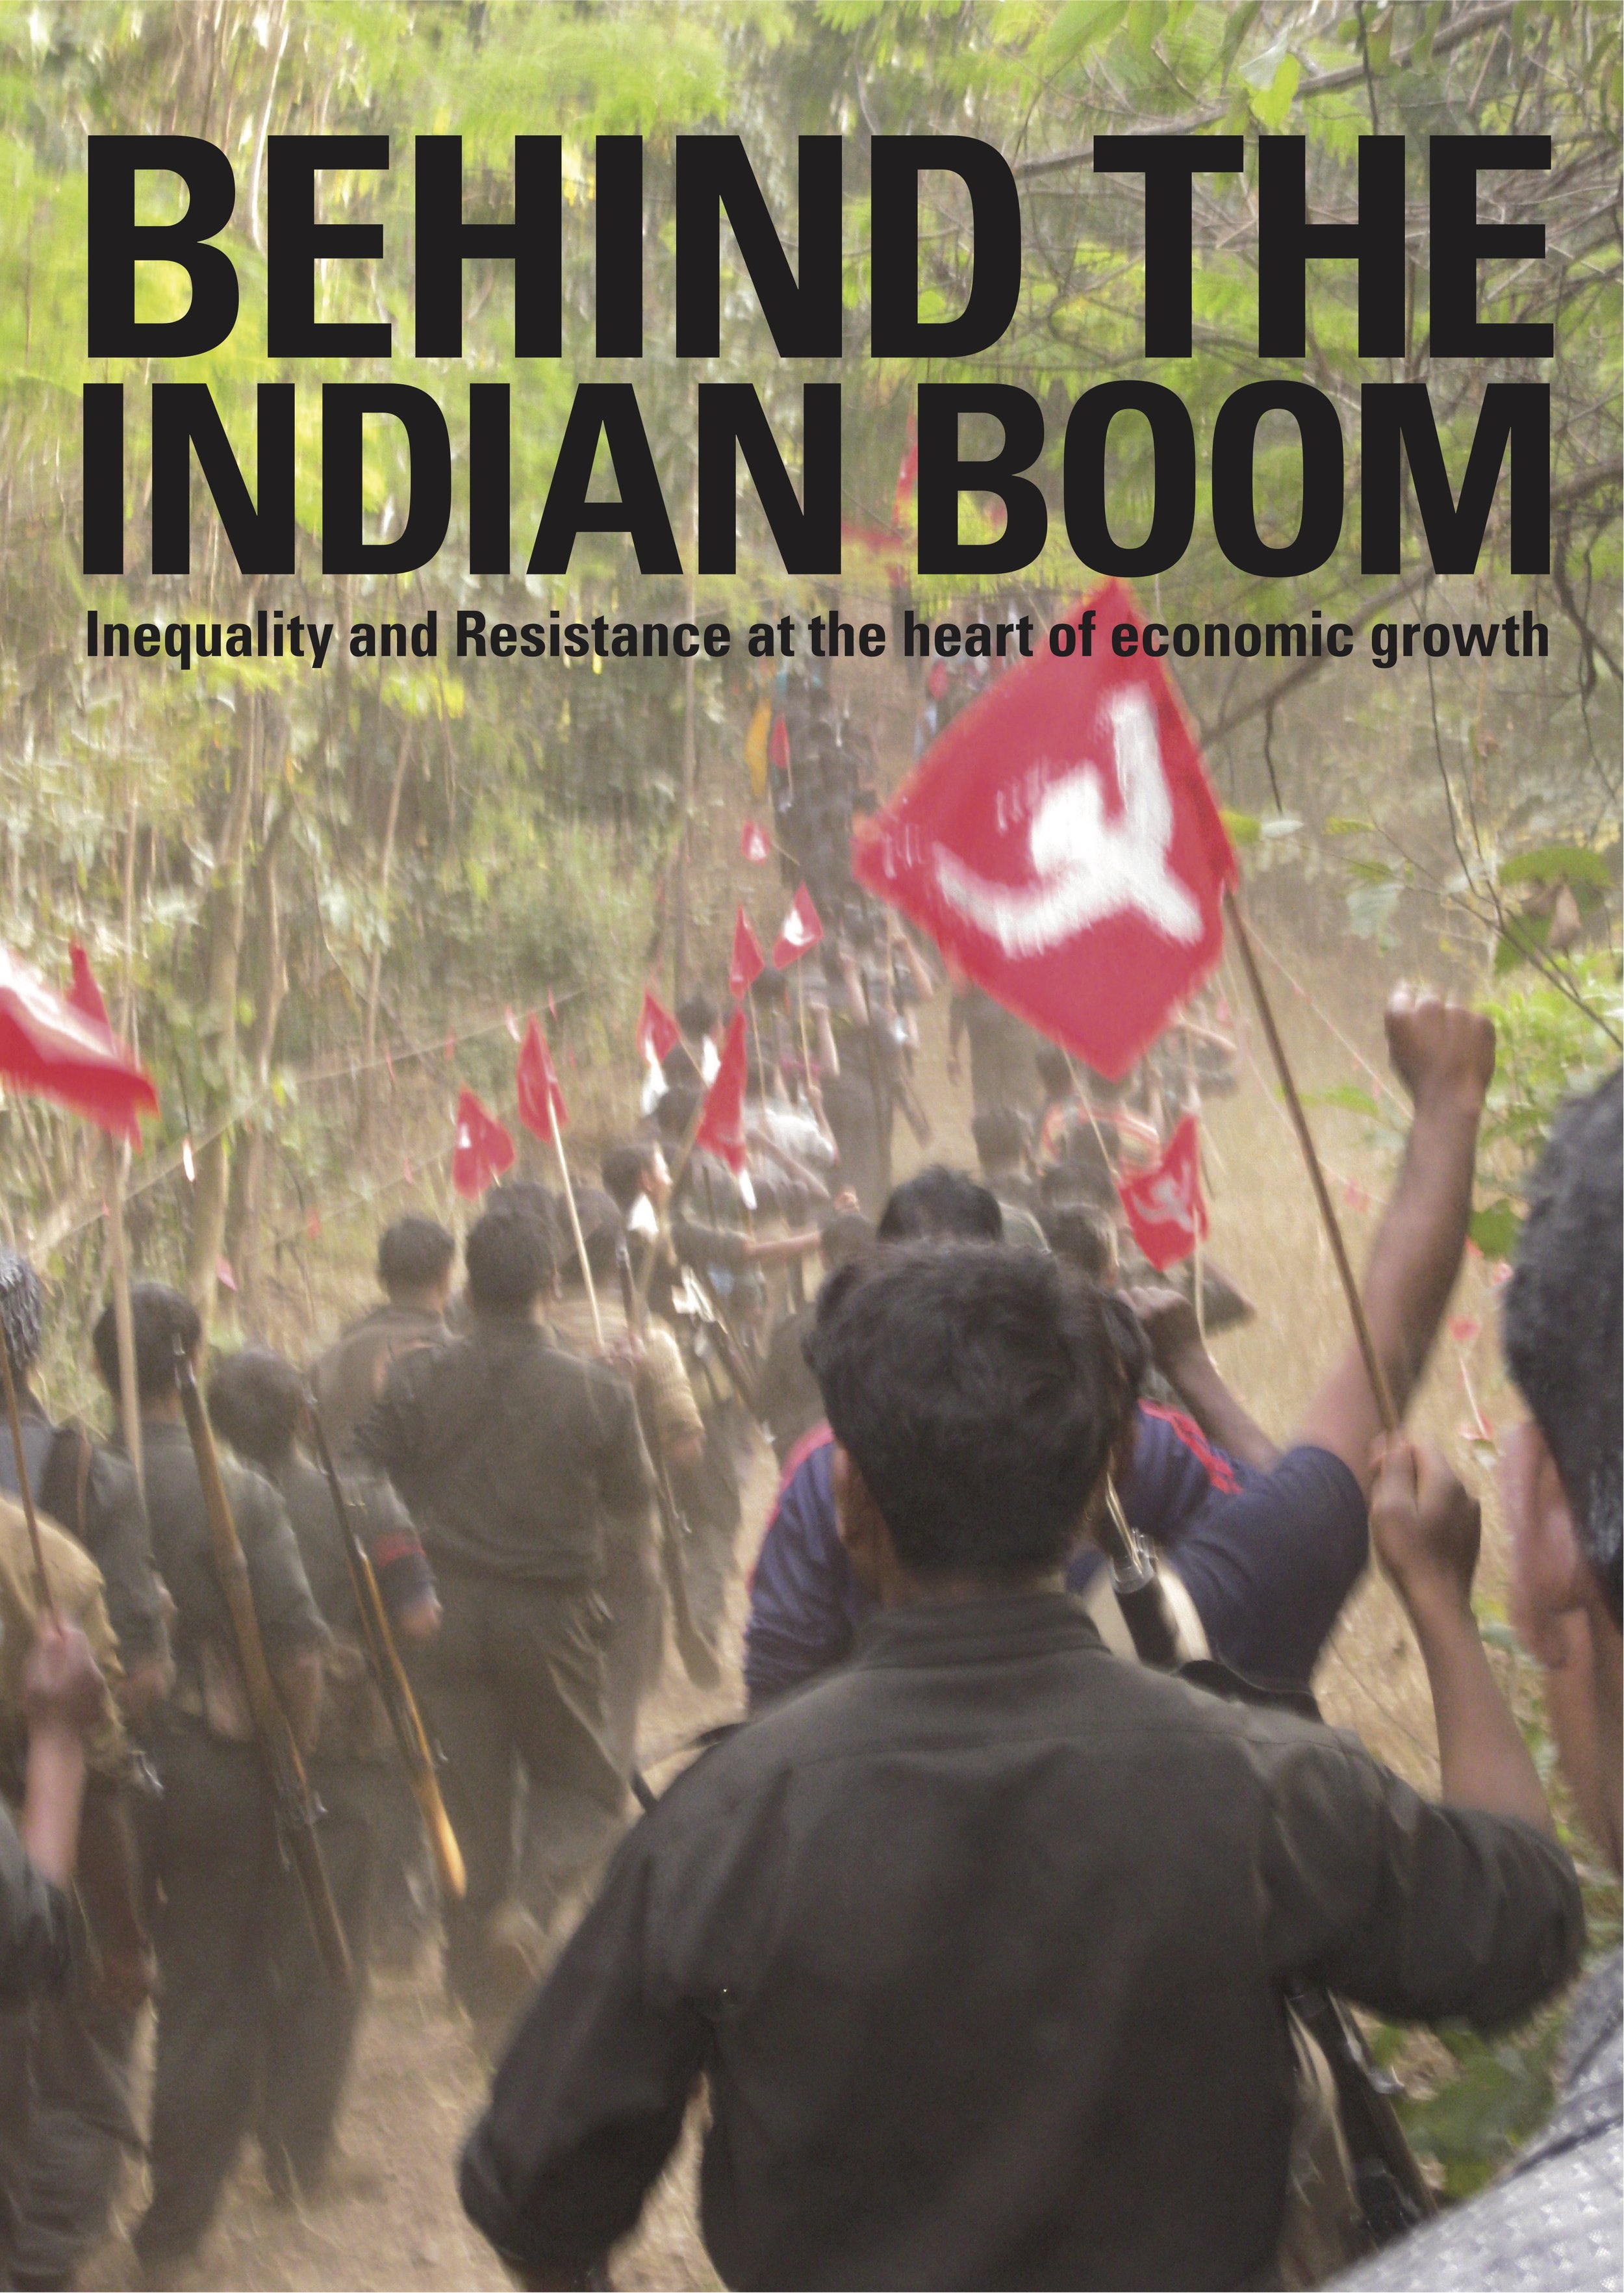 Banner of Indian Boom - Maoist.jpg